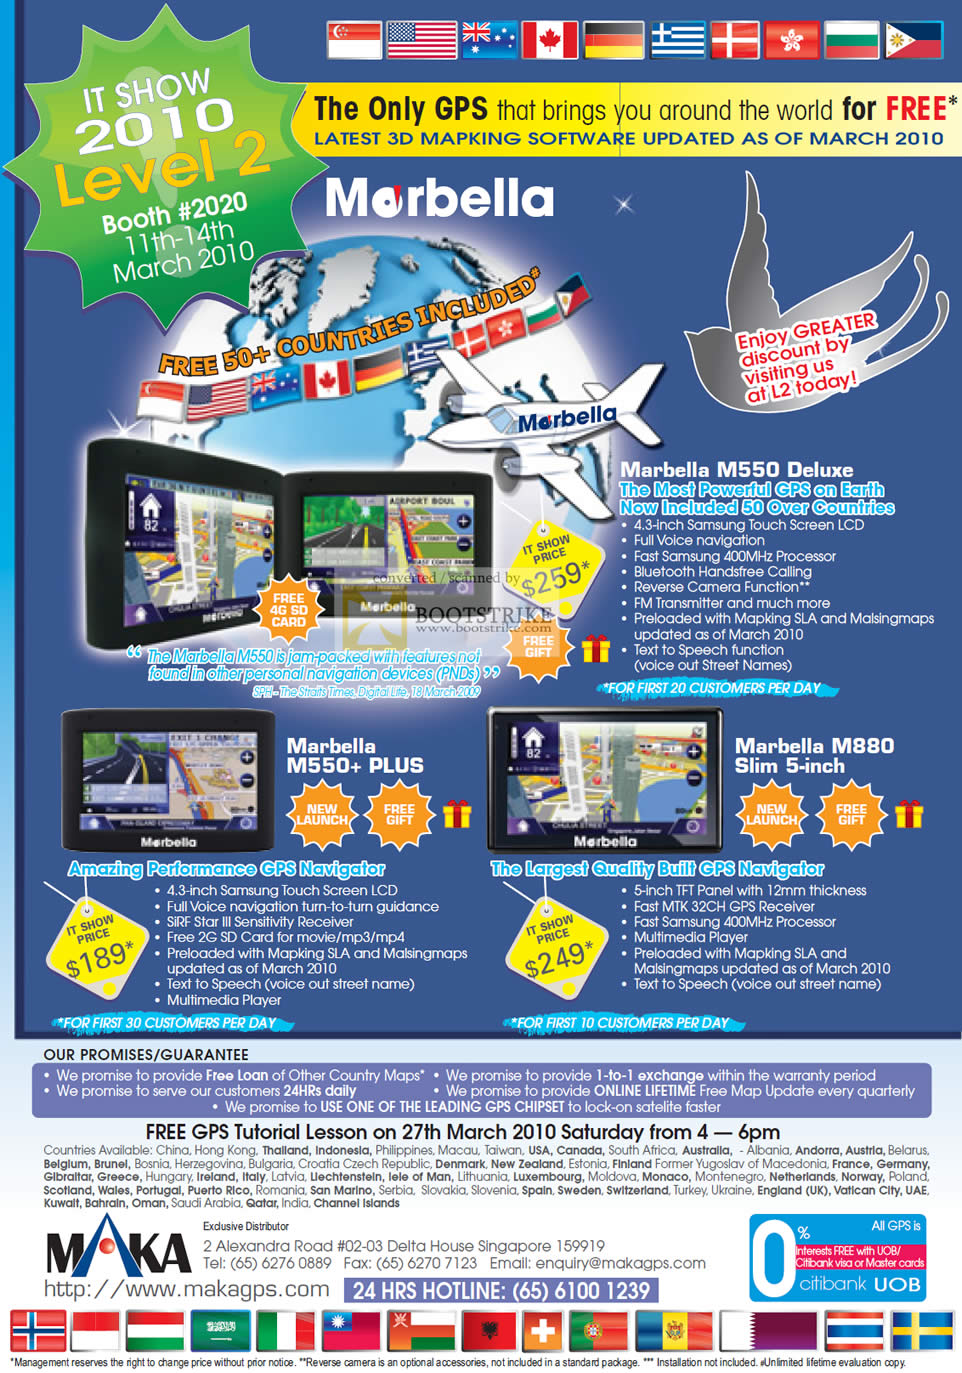 IT Show 2010 price list image brochure of Maka GPS Technologies Marbella Navigation M550 Deluxe Plus M880 Slim Mapking